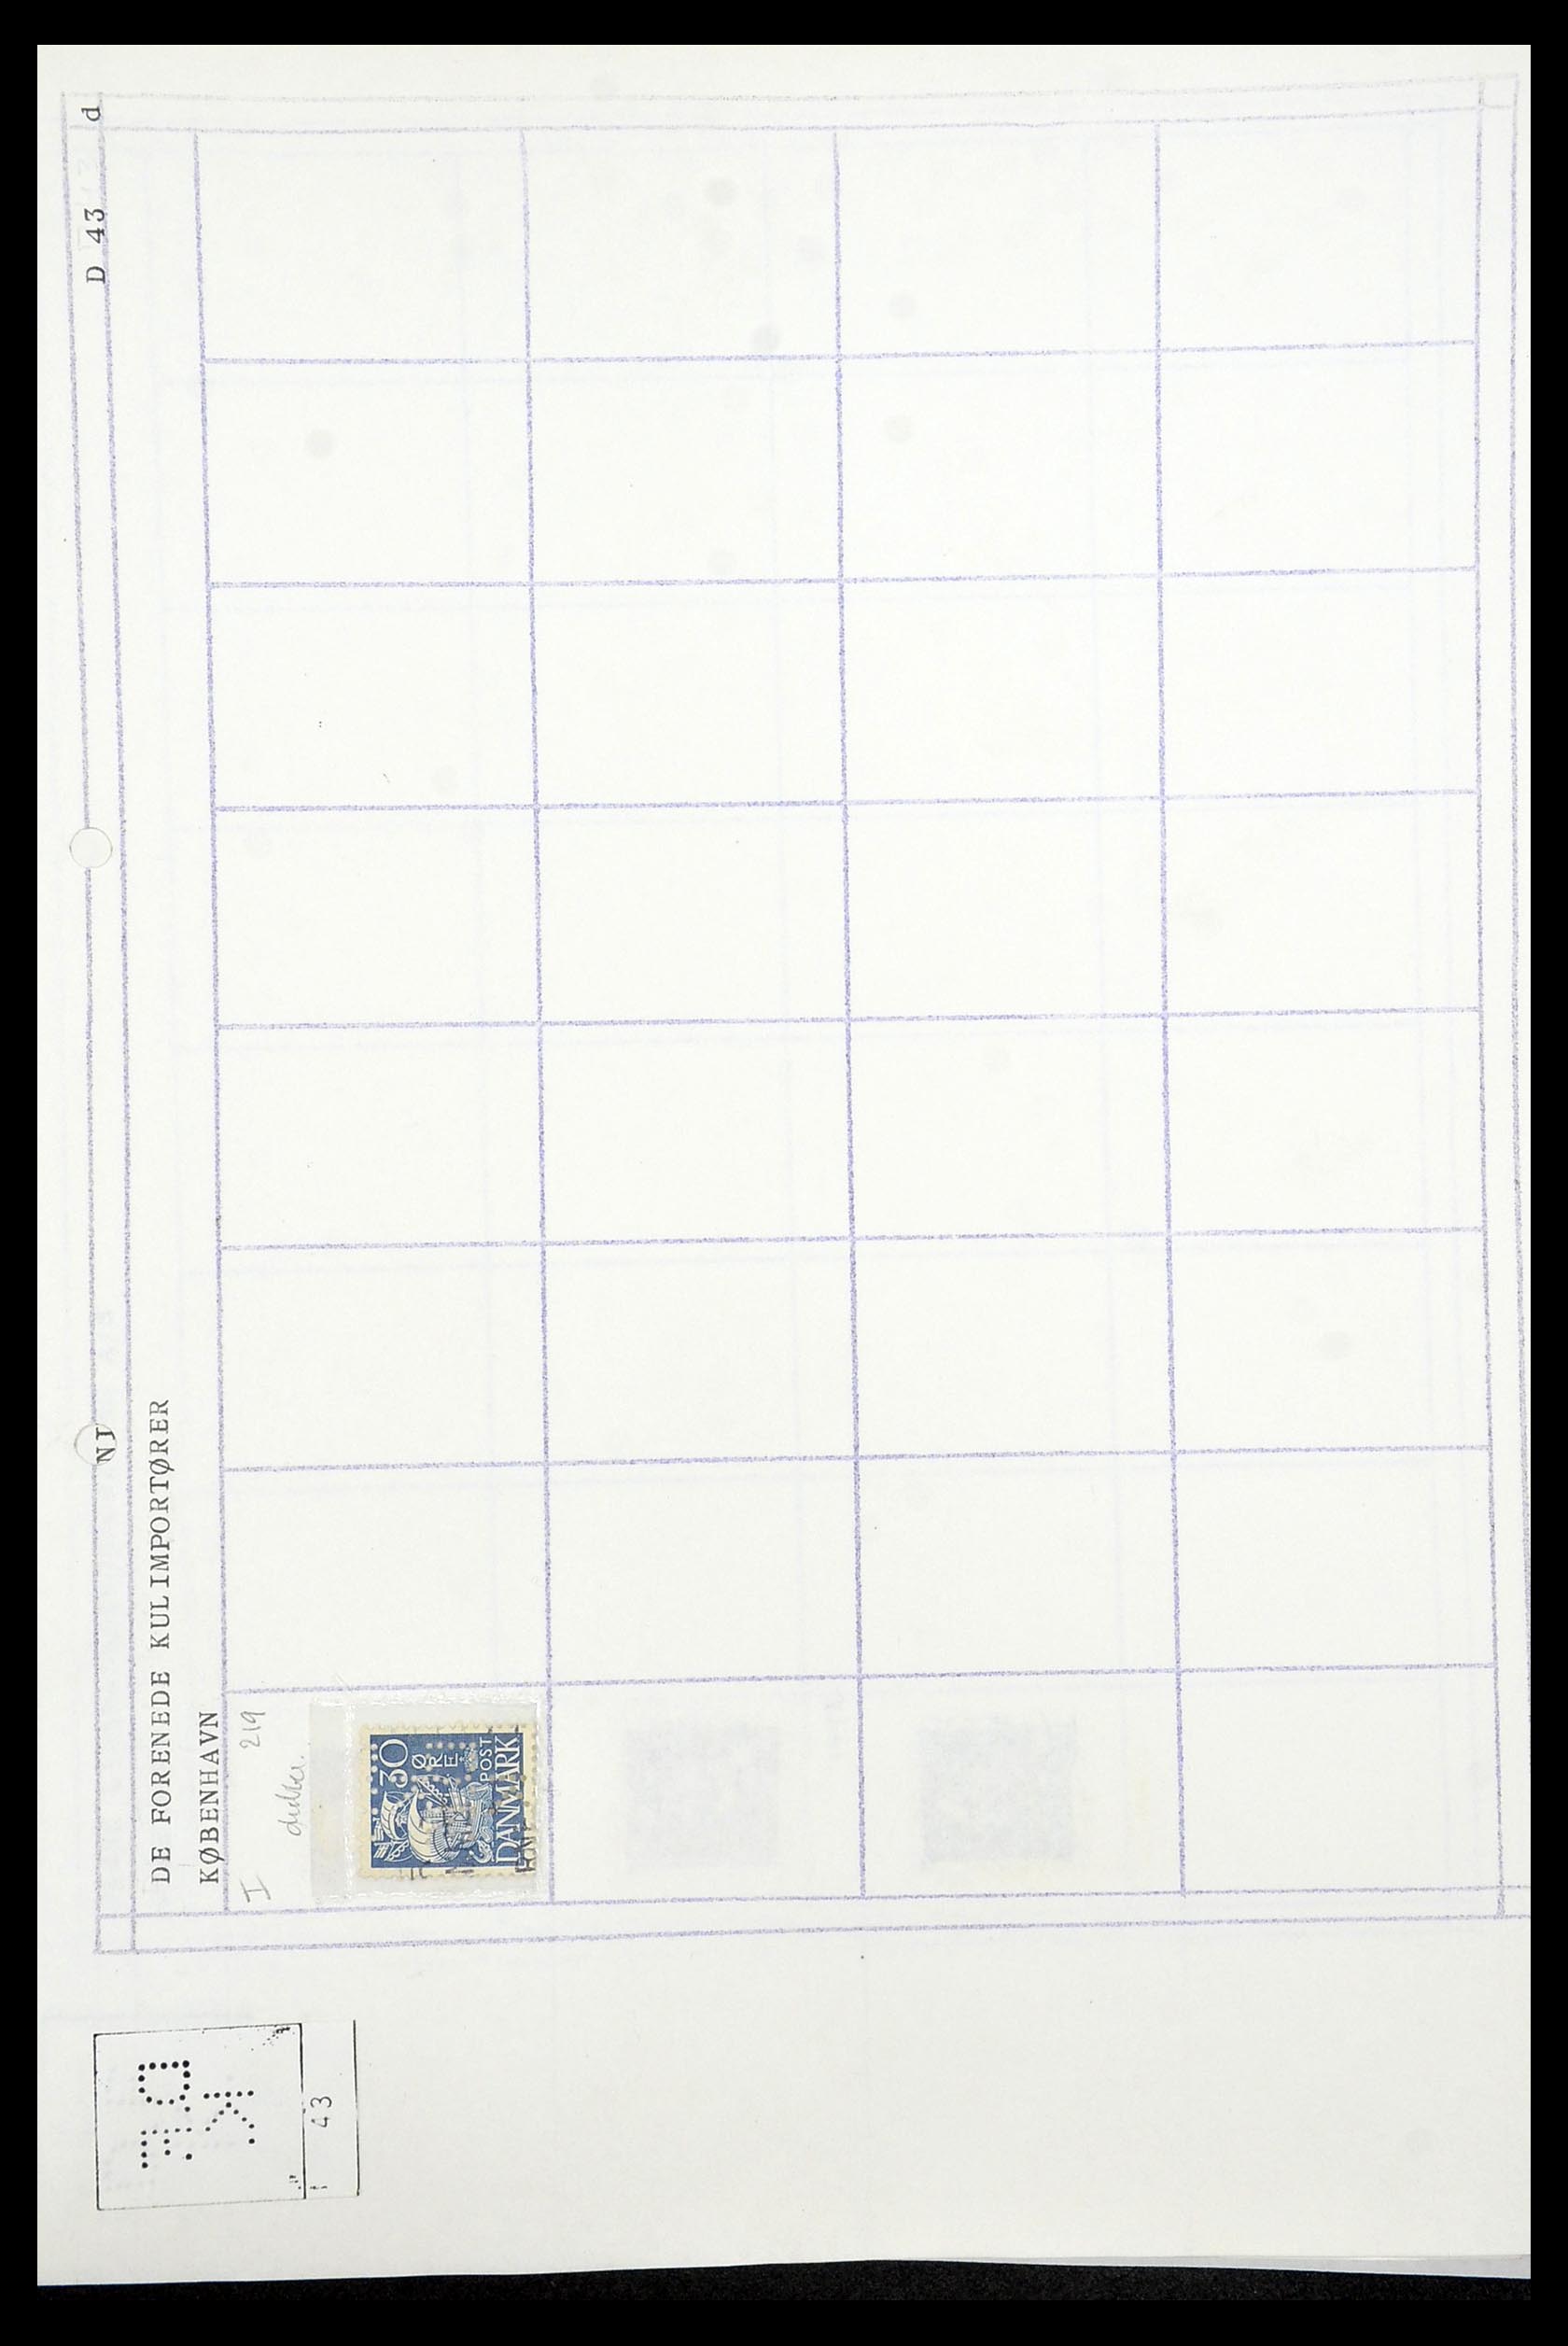 34415 066 - Stamp Collection 34415 Denmark perfins 1875-1980.